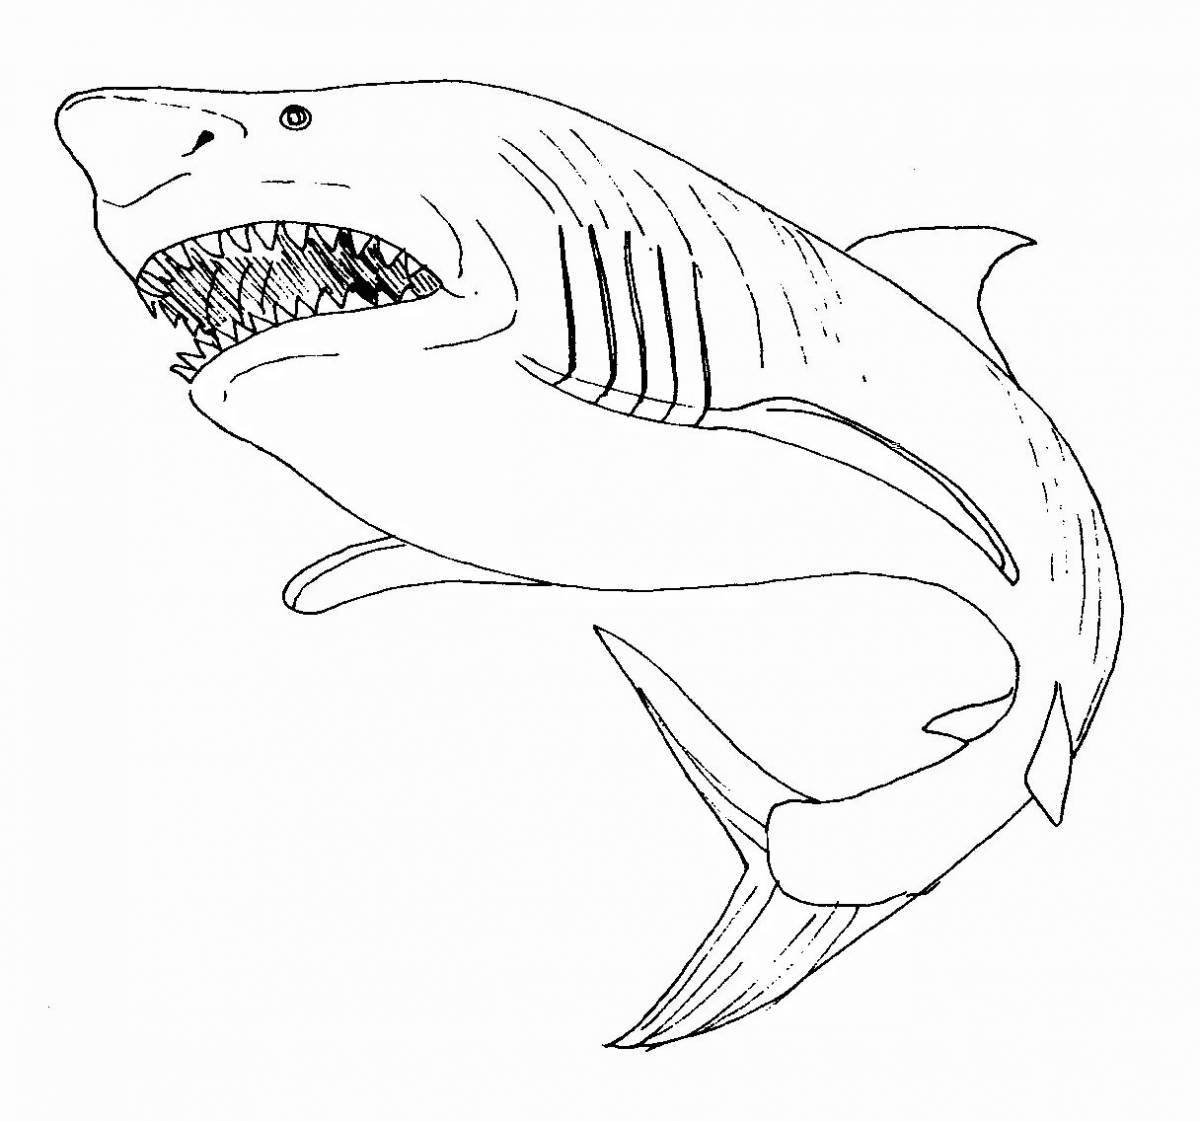 Fascinating white shark coloring book